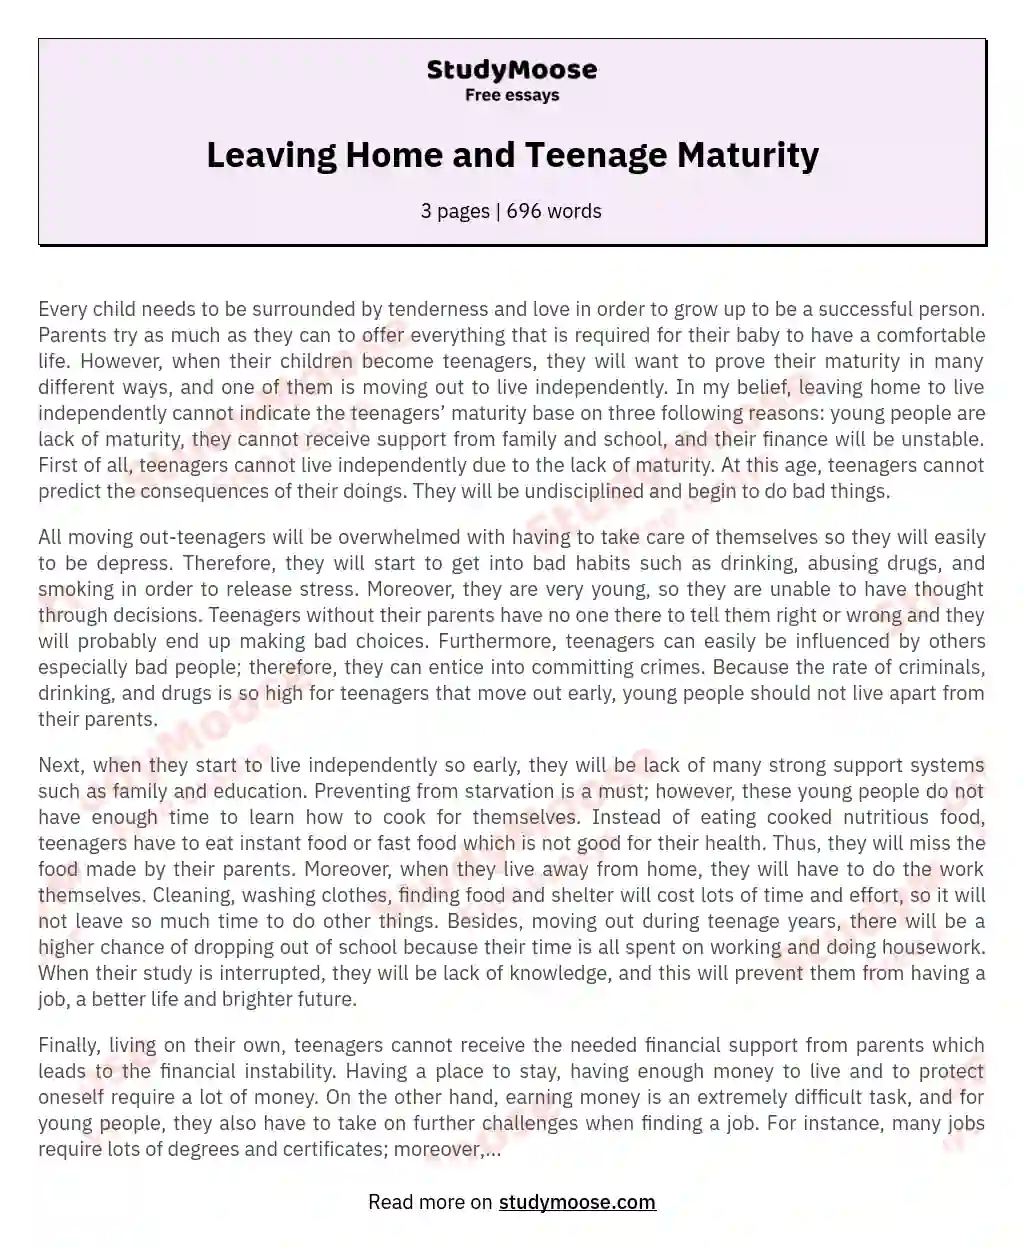 Leaving Home and Teenage Maturity essay